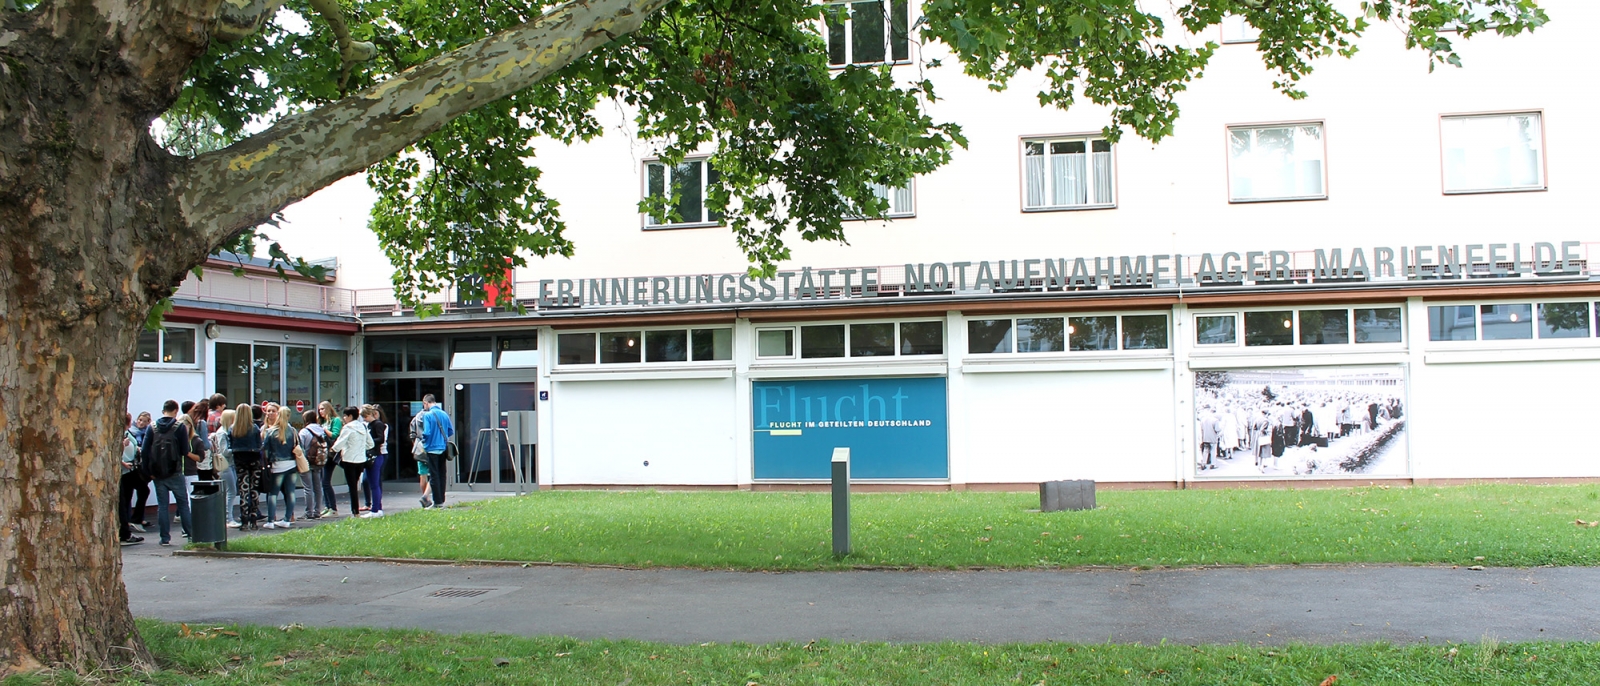 Exterior grounds of the Marienfelde Refugee Center Museum